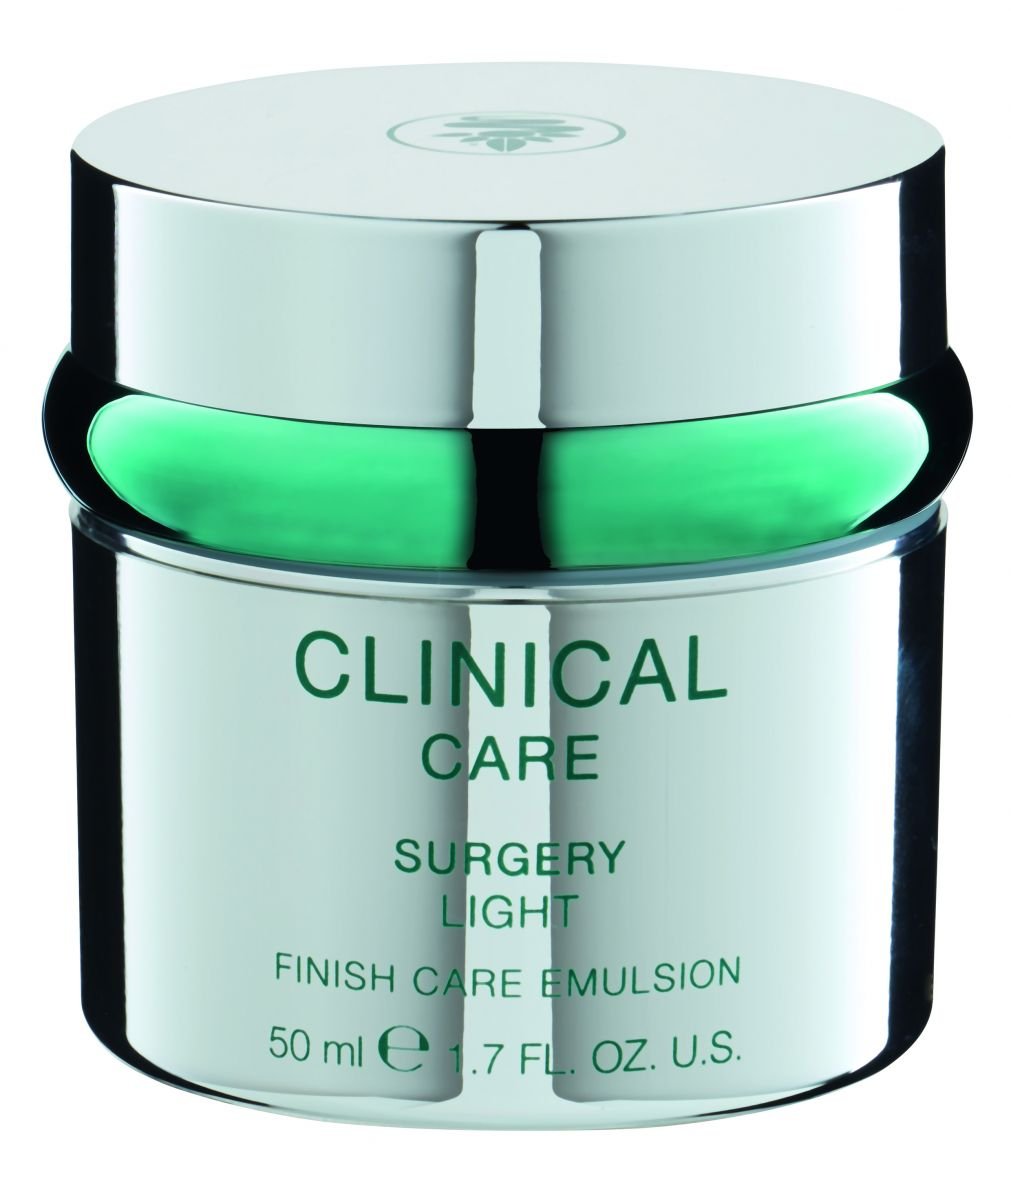 Surgery Light - Finish Care Emulsion 50 ml